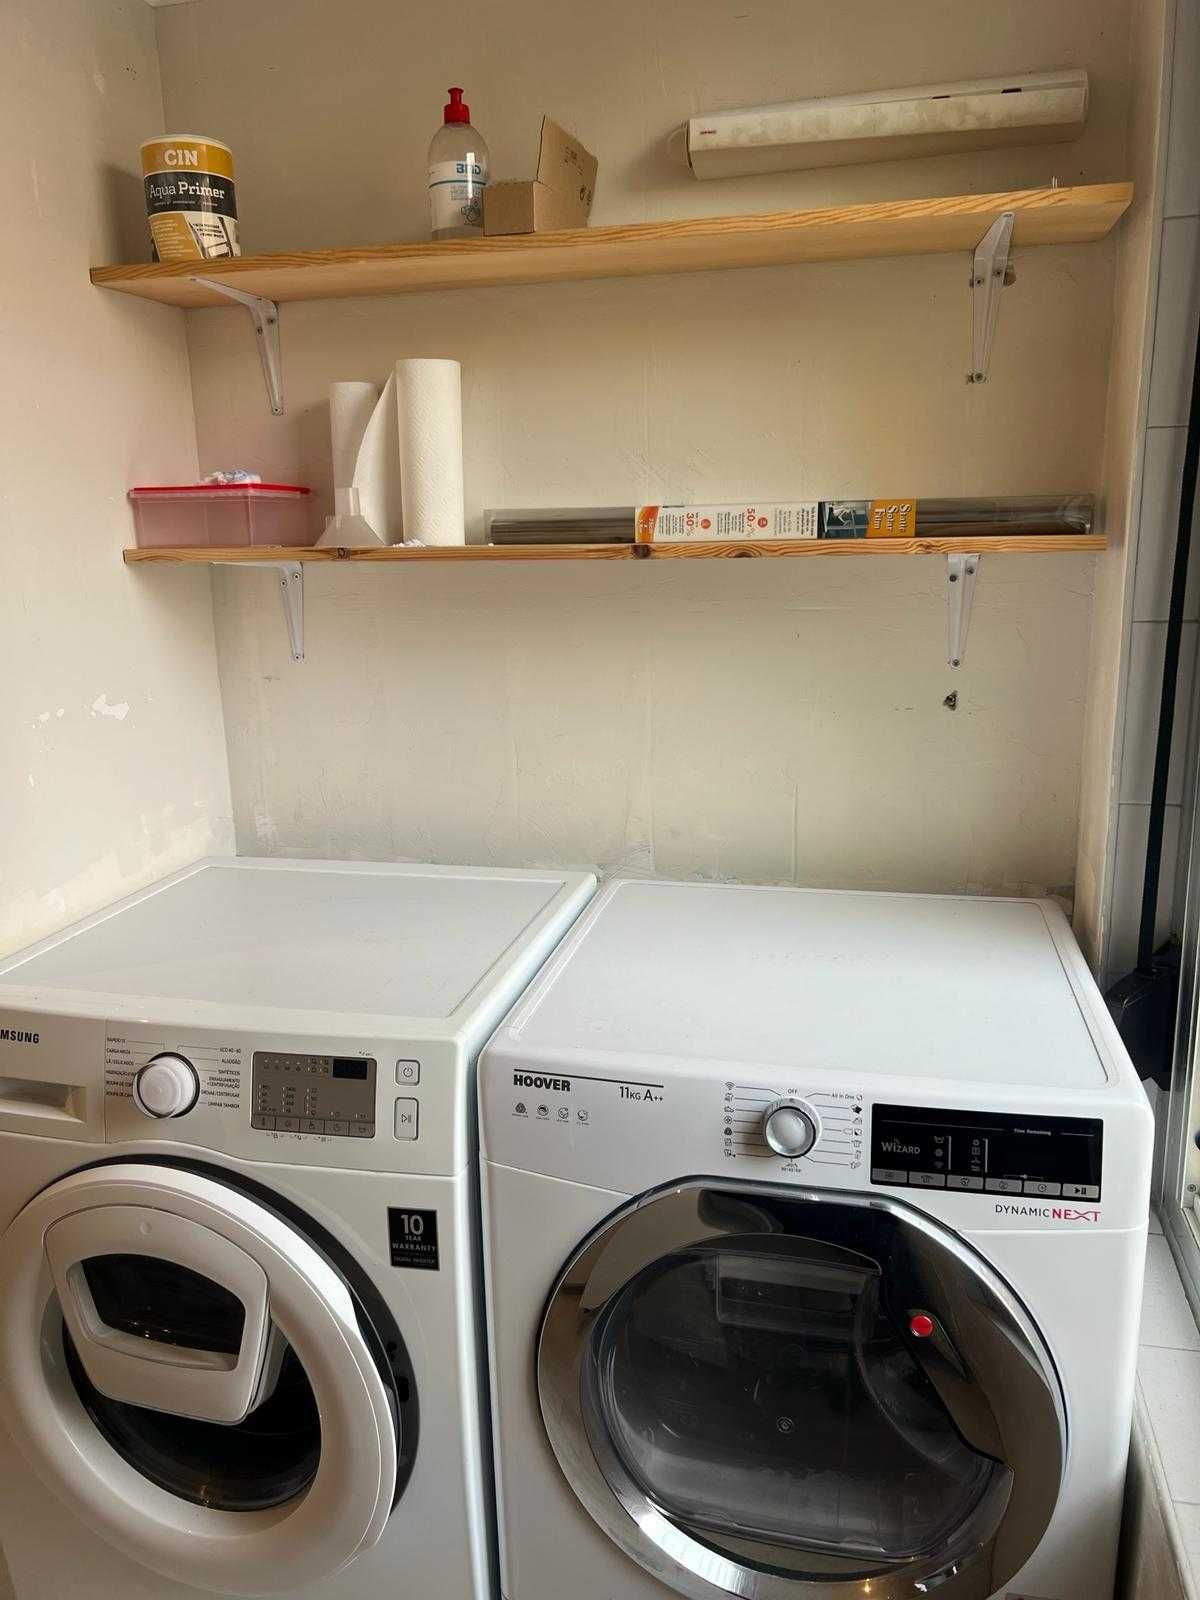 Máquina de Lavar Roupa SAMSUNG